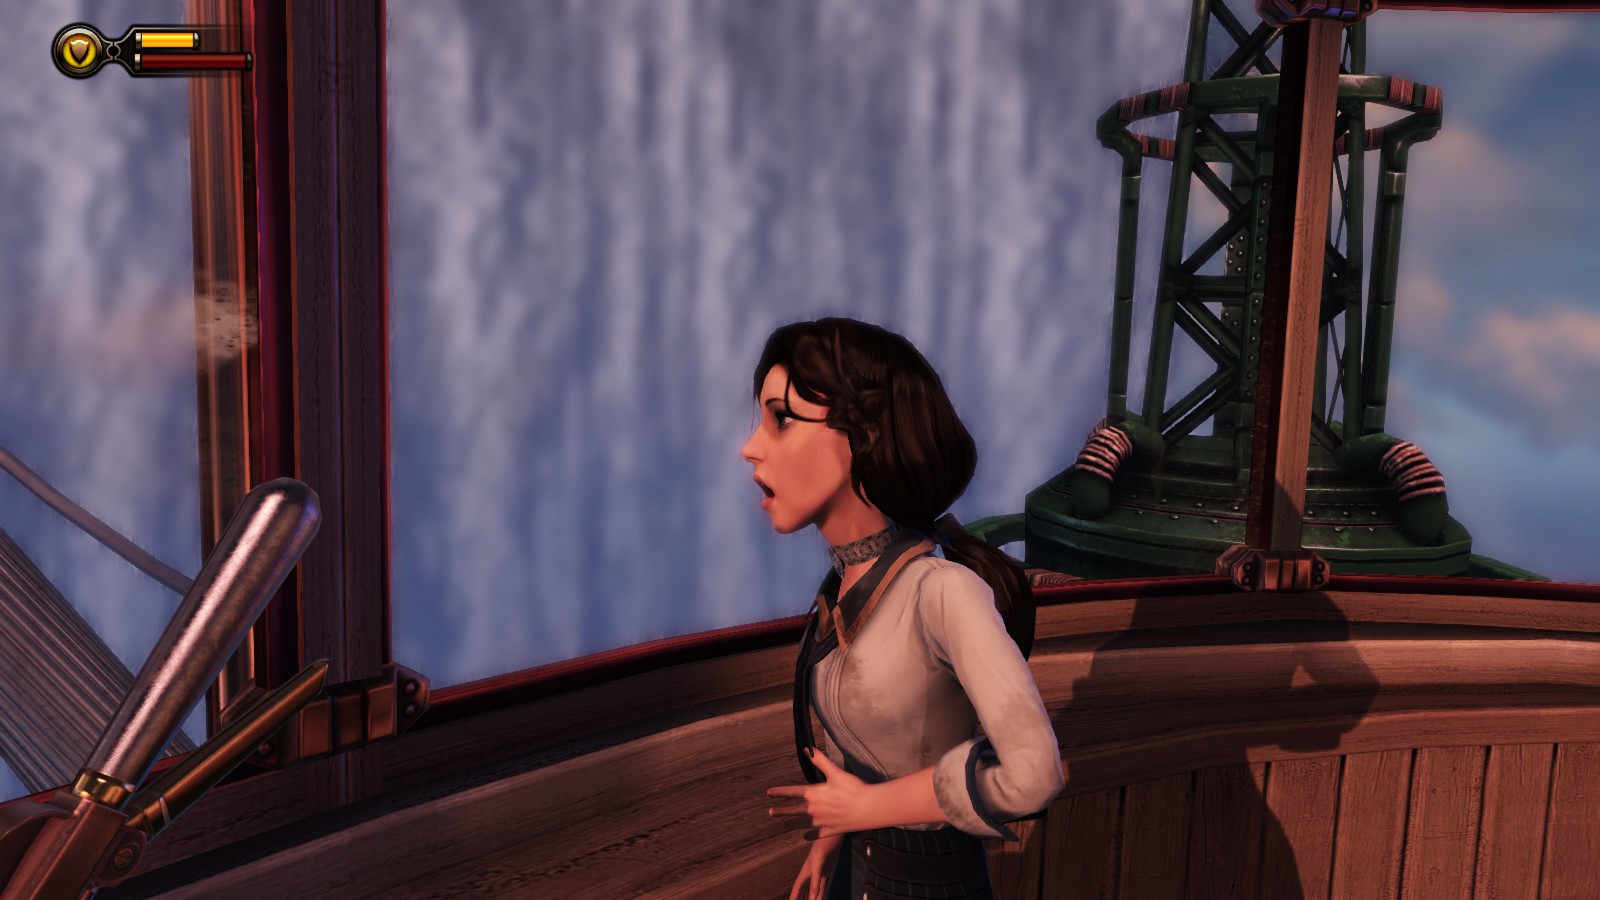 Bioshock Infinite - Pursuing Elizabeth Gameplay (PC) 